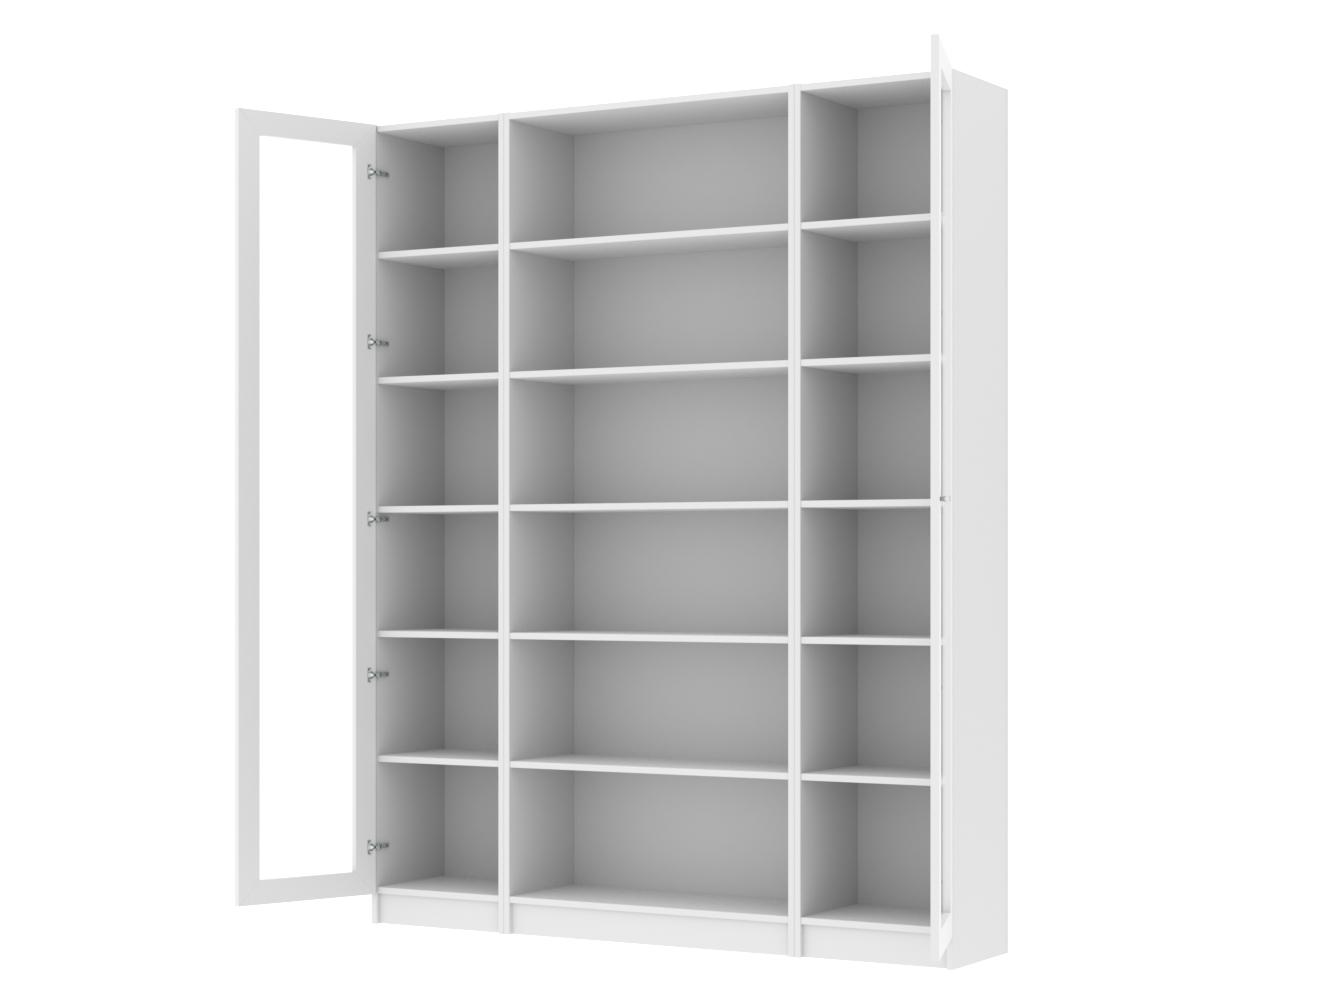  Книжный шкаф Билли 423 white ИКЕА (IKEA) изображение товара